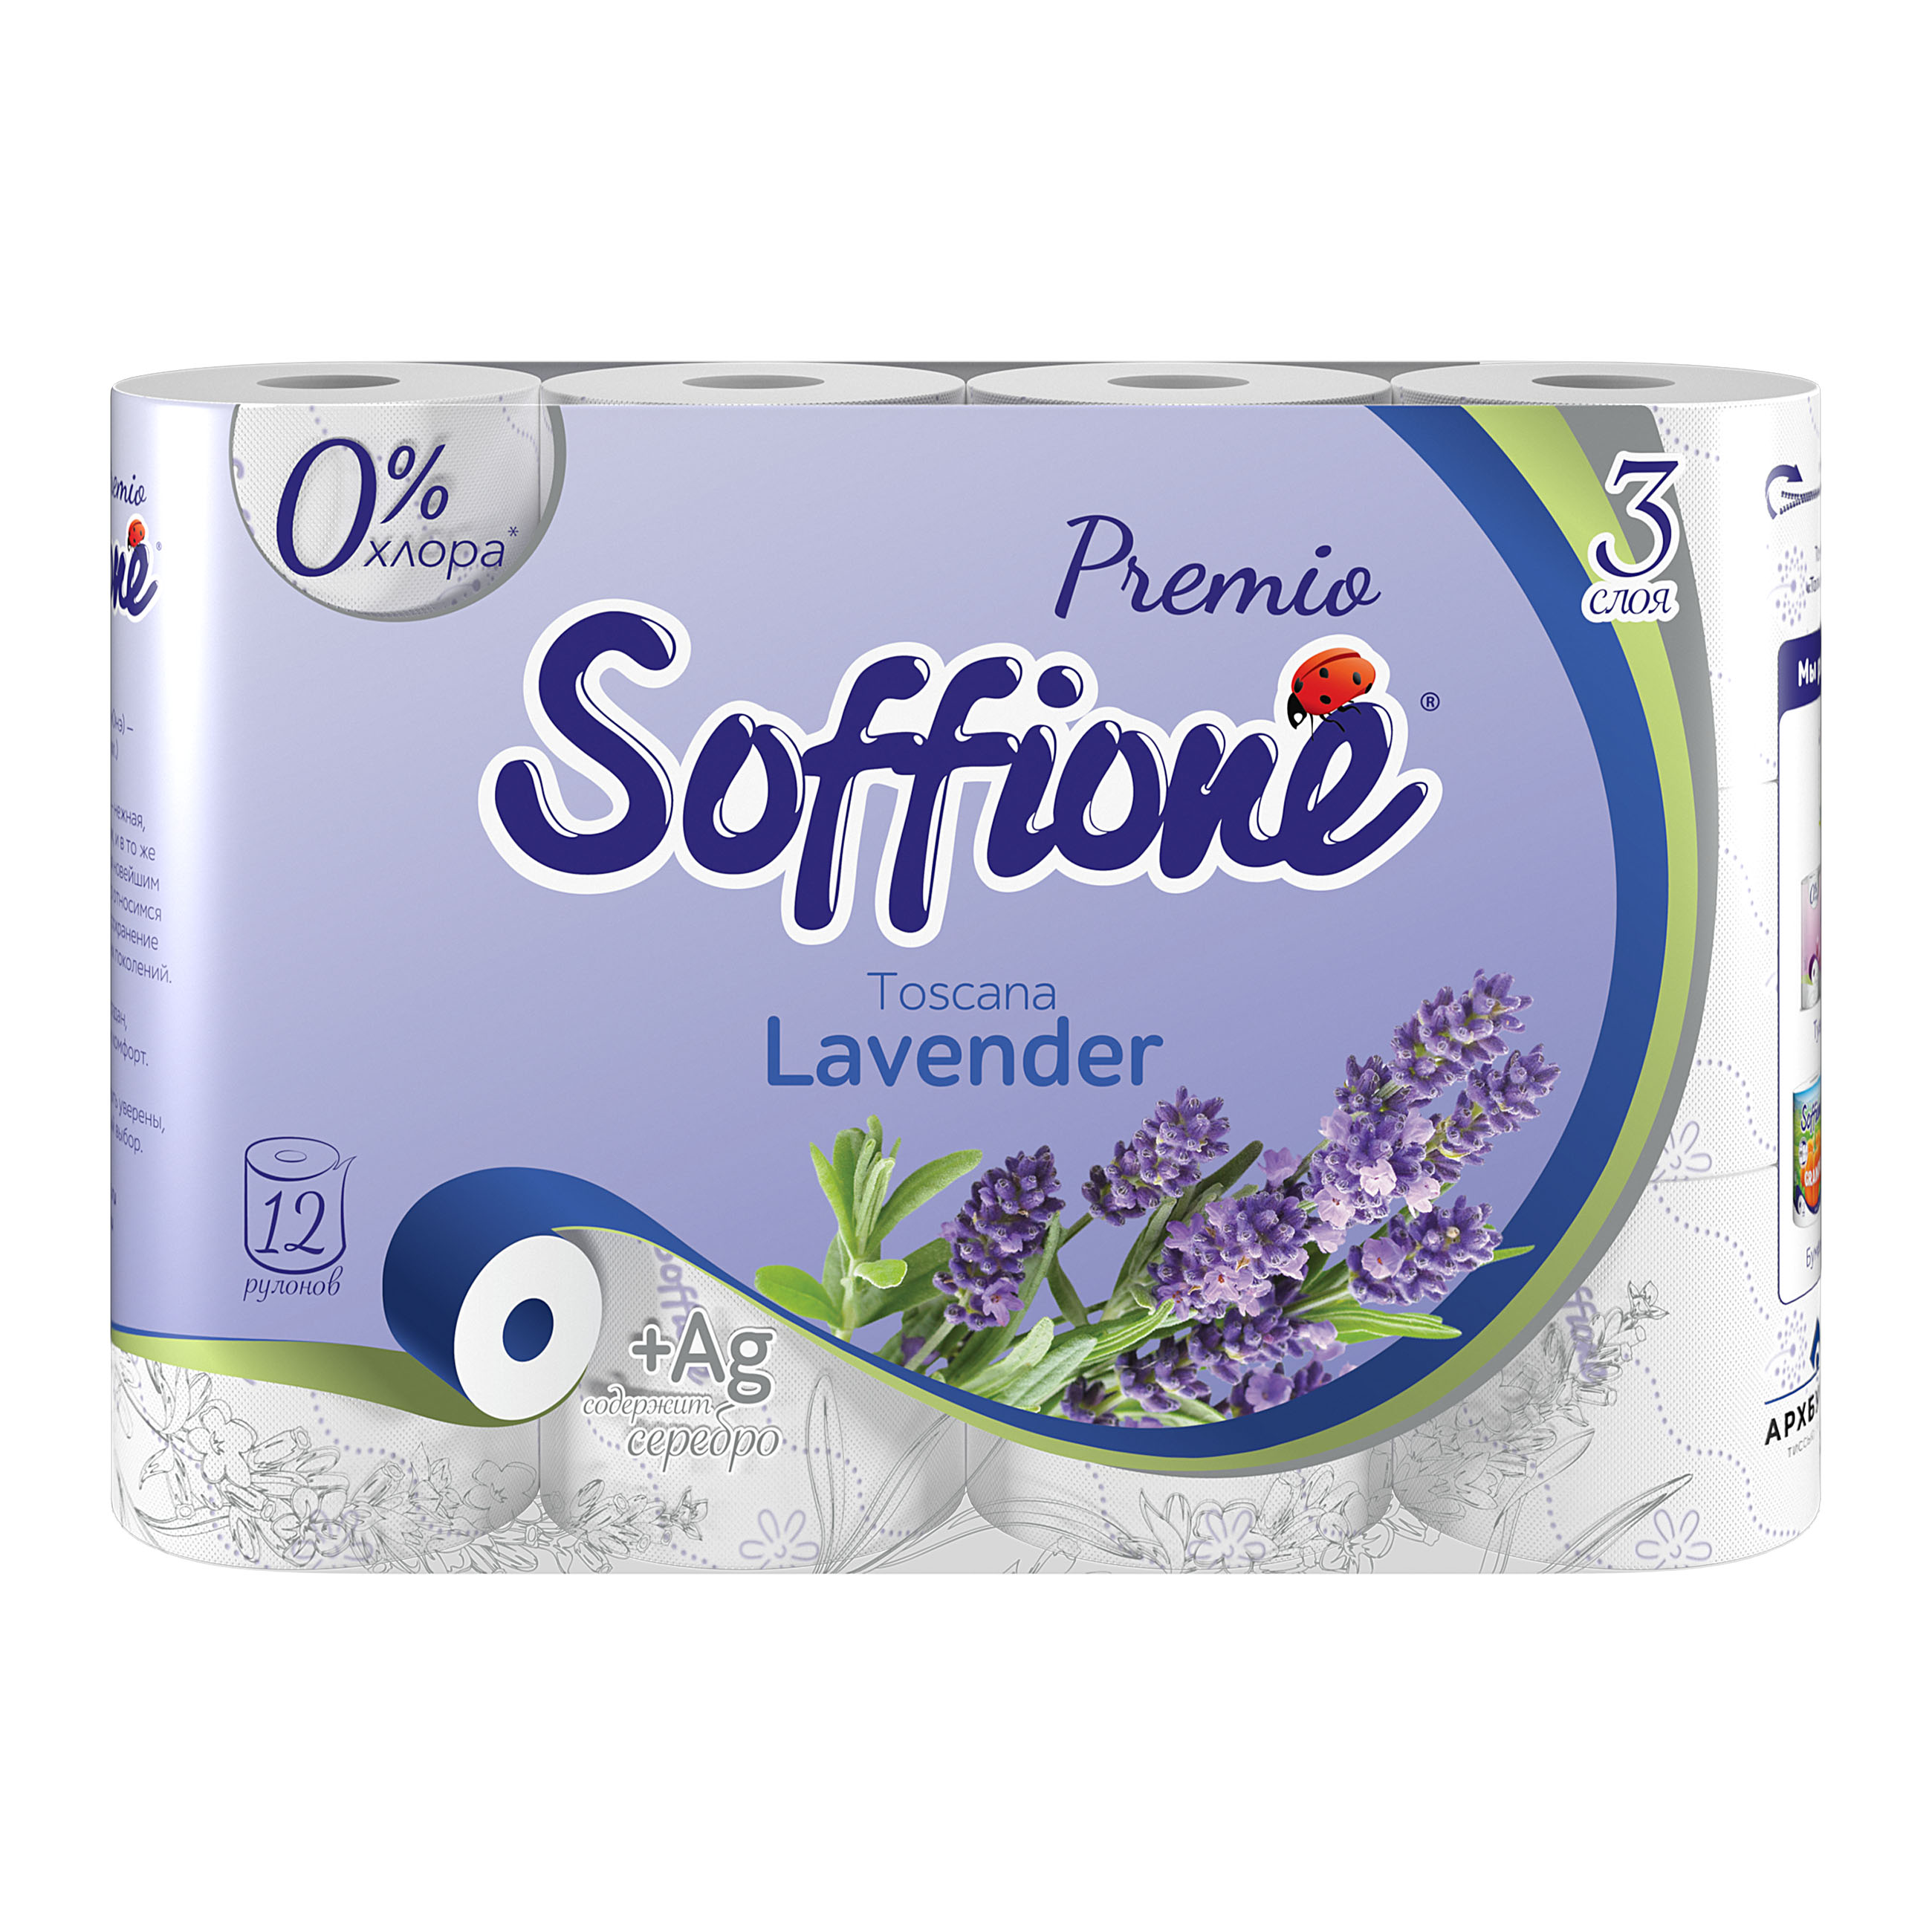 Туалетная бумага Soffione Premio Toscana Lavender трехслойная с тиснением, лаванда, 12 шт.